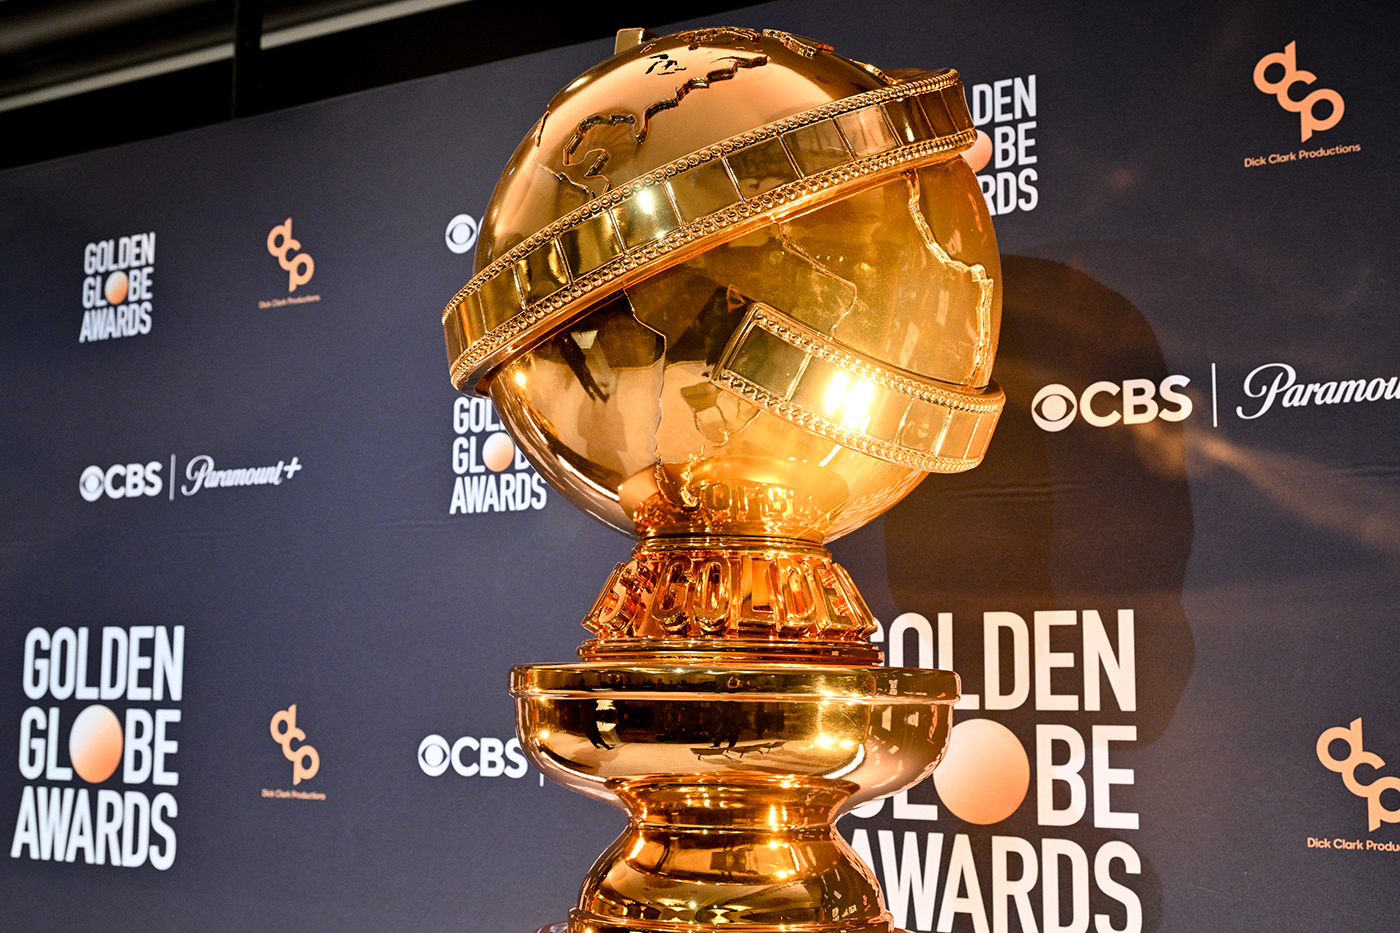 Golden Globe awards trophy